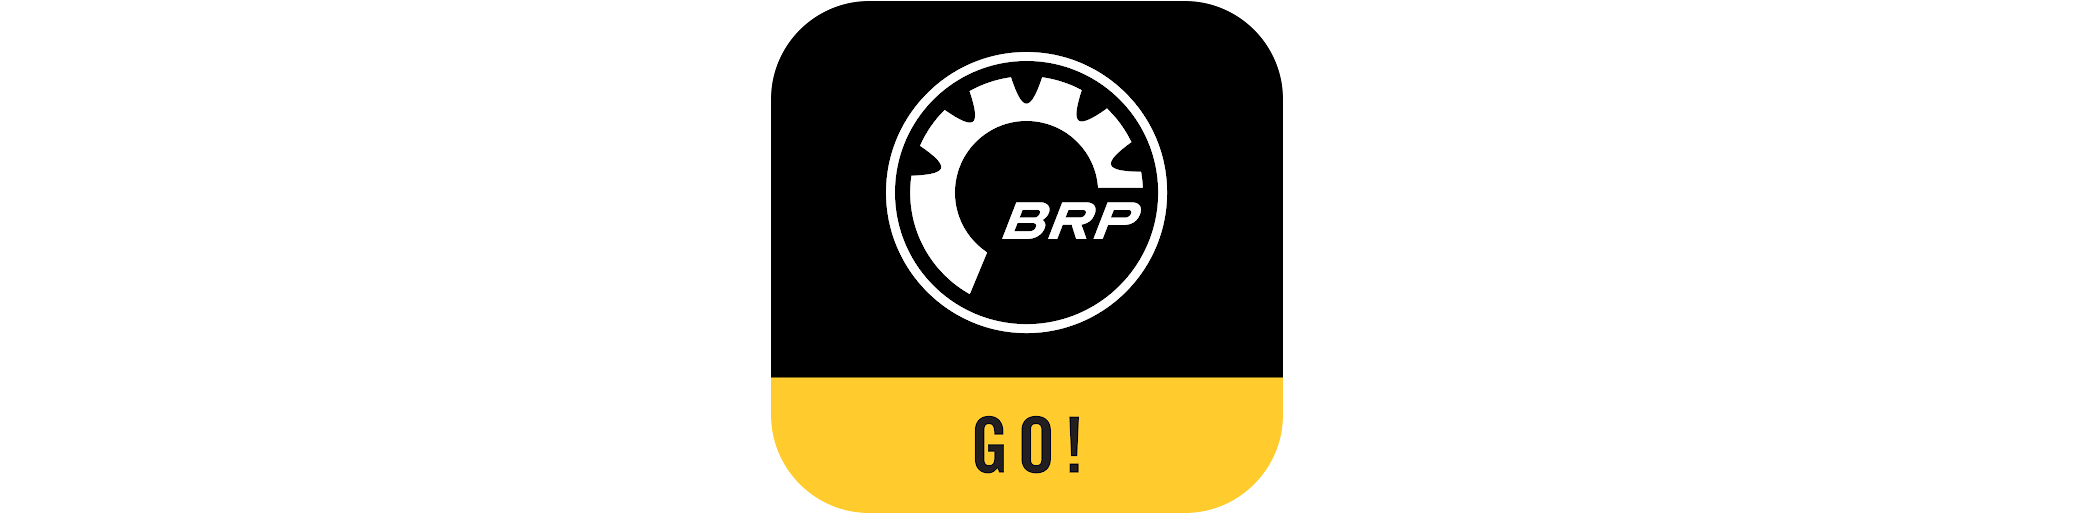 BRP GO! App logo